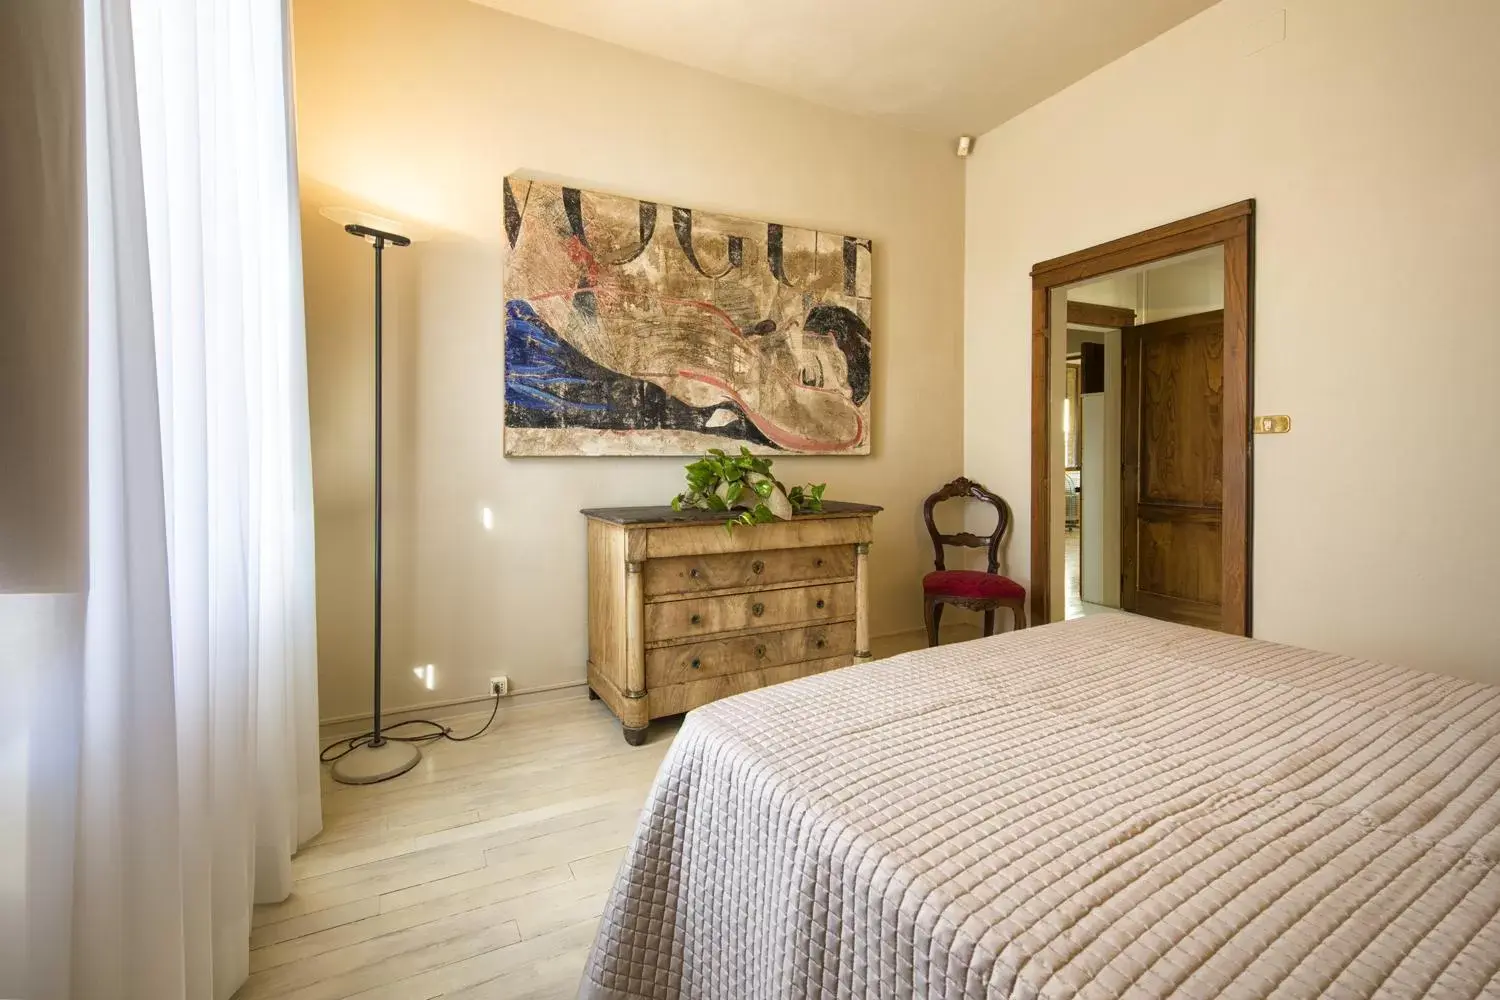 Bedroom, Room Photo in Drogheria e Locanda Franci